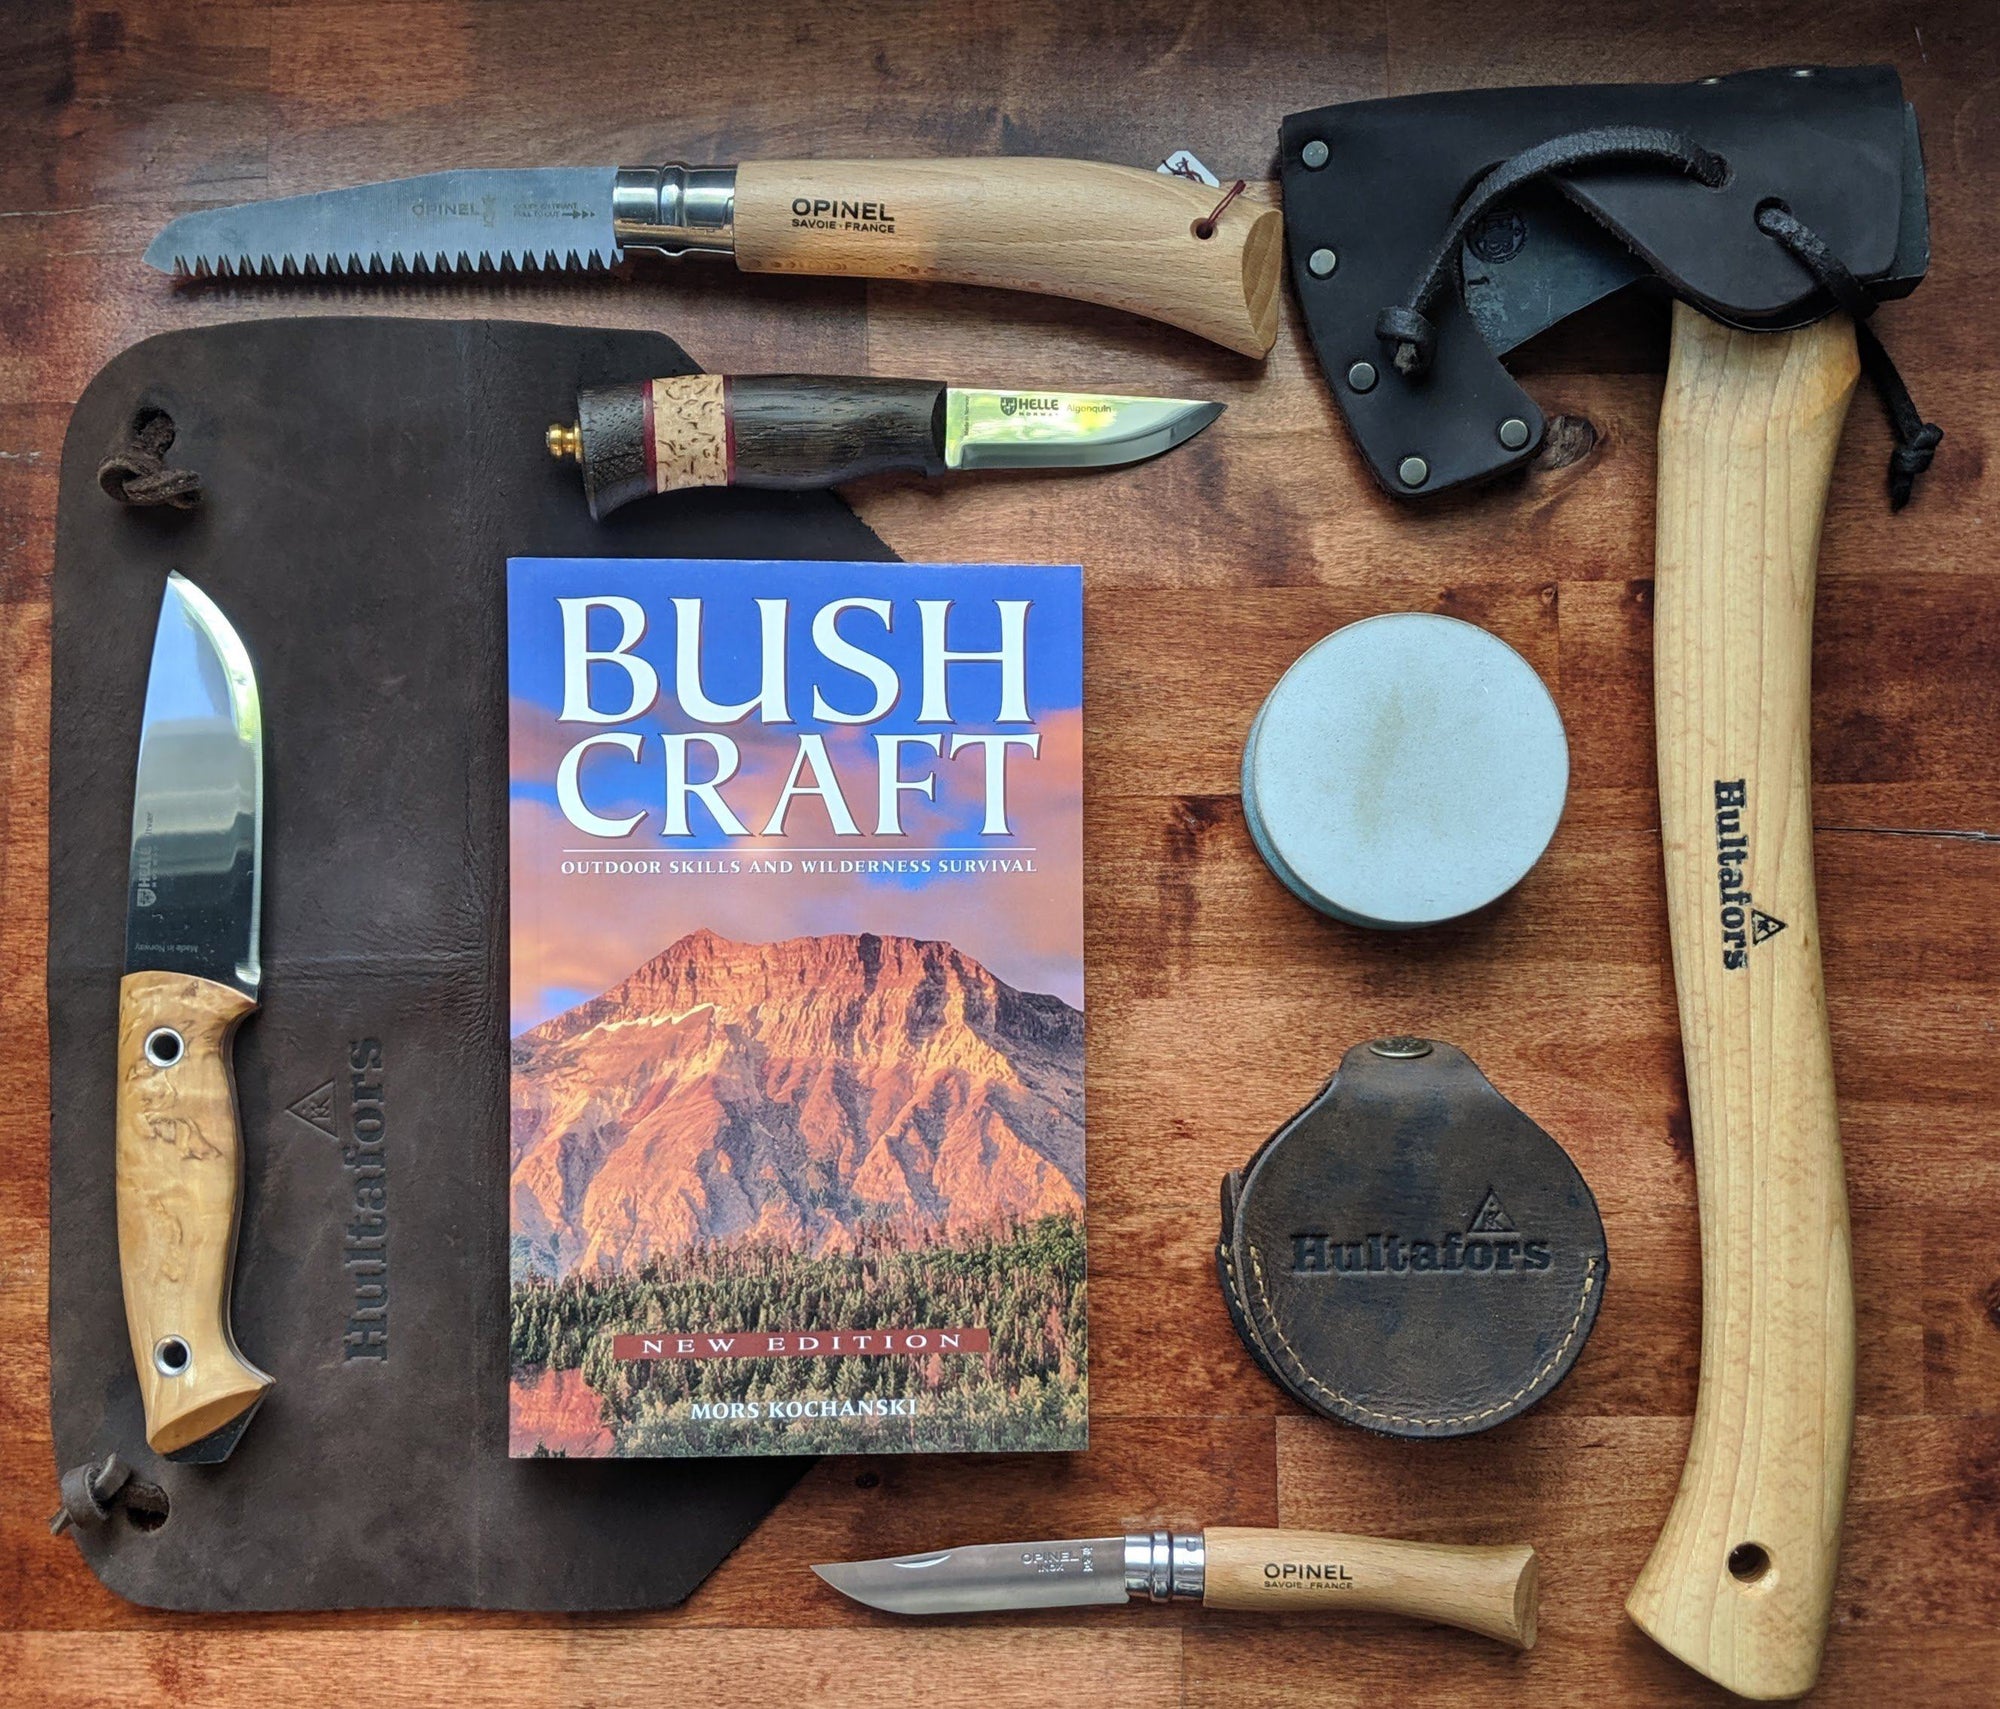 Bushcraft - Outdoor Skills and Wilderness Survival by Mors Kochanski